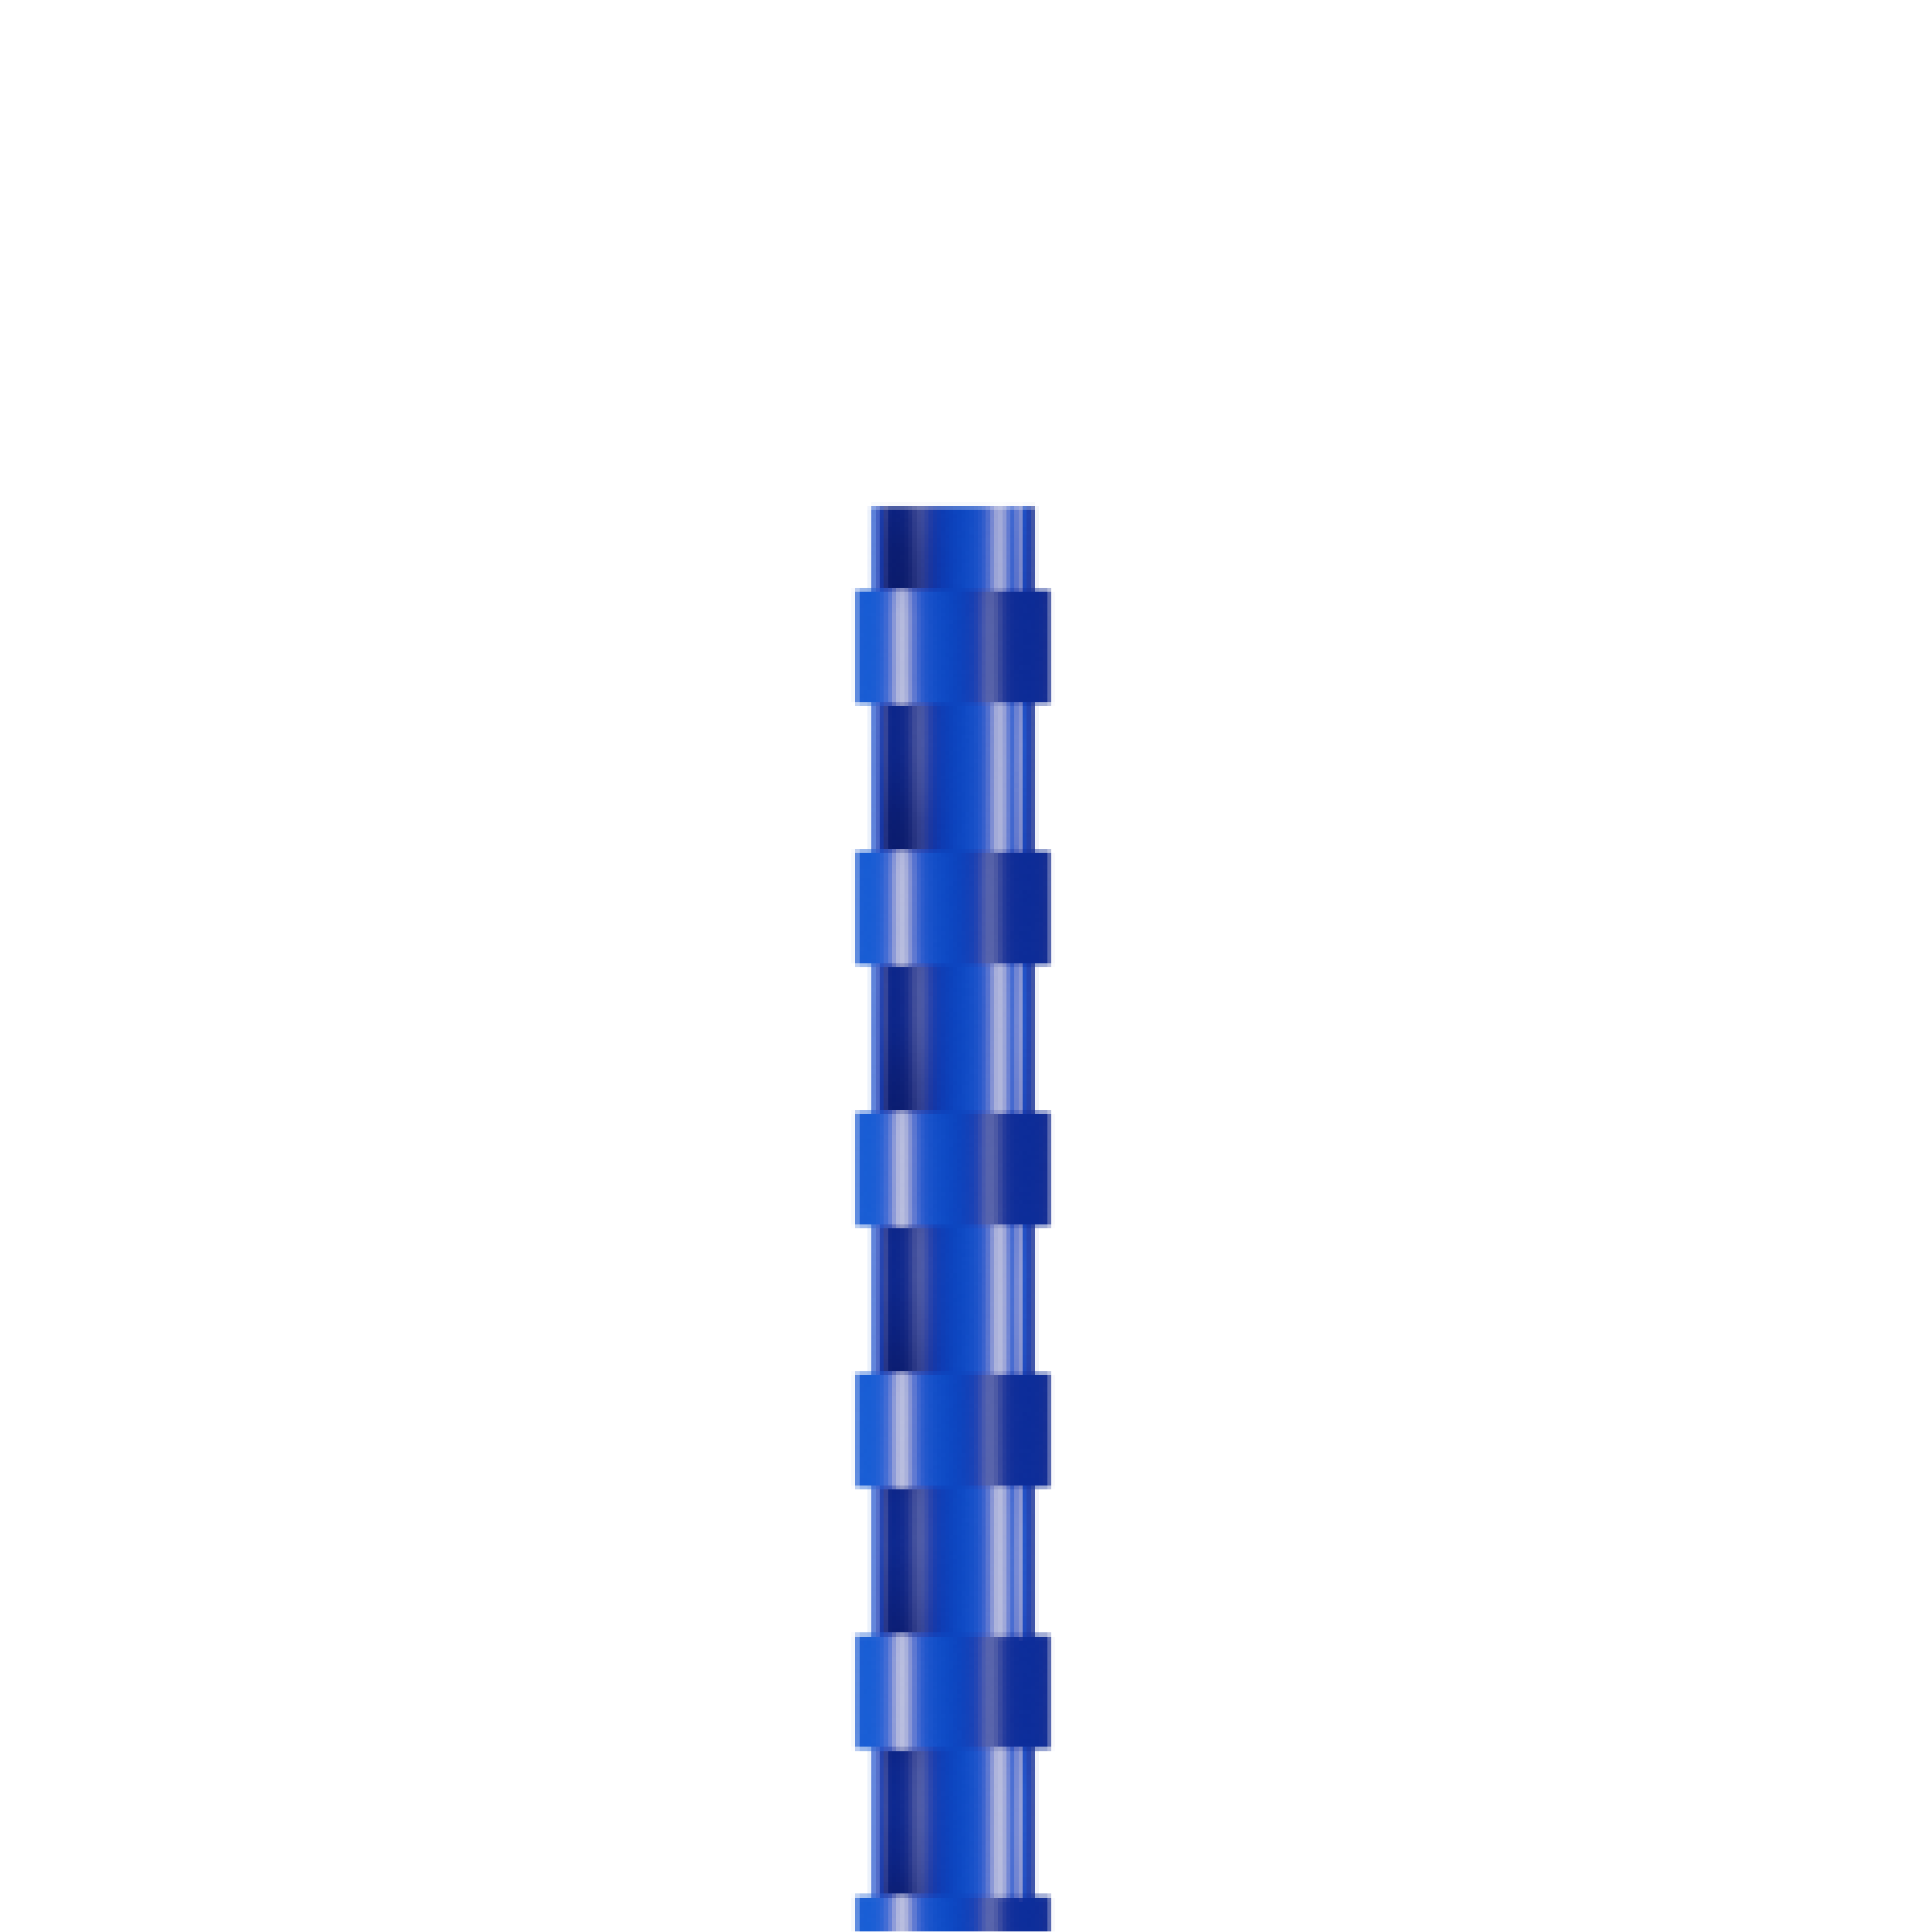 RAADO 10mm Plastic Spiral Binding Comb, Blue